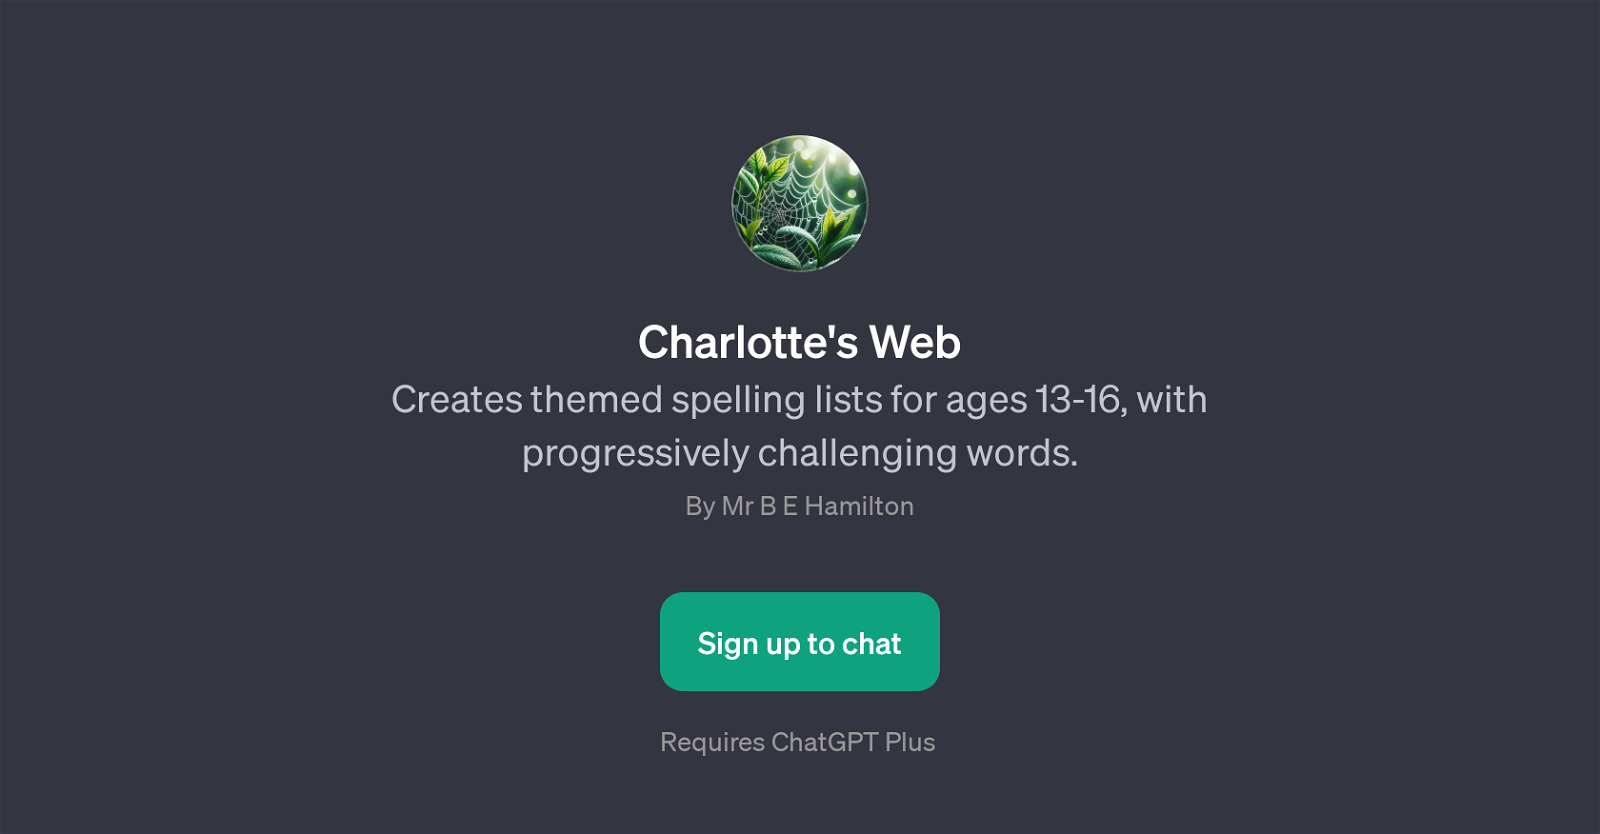 Charlotte's Web website